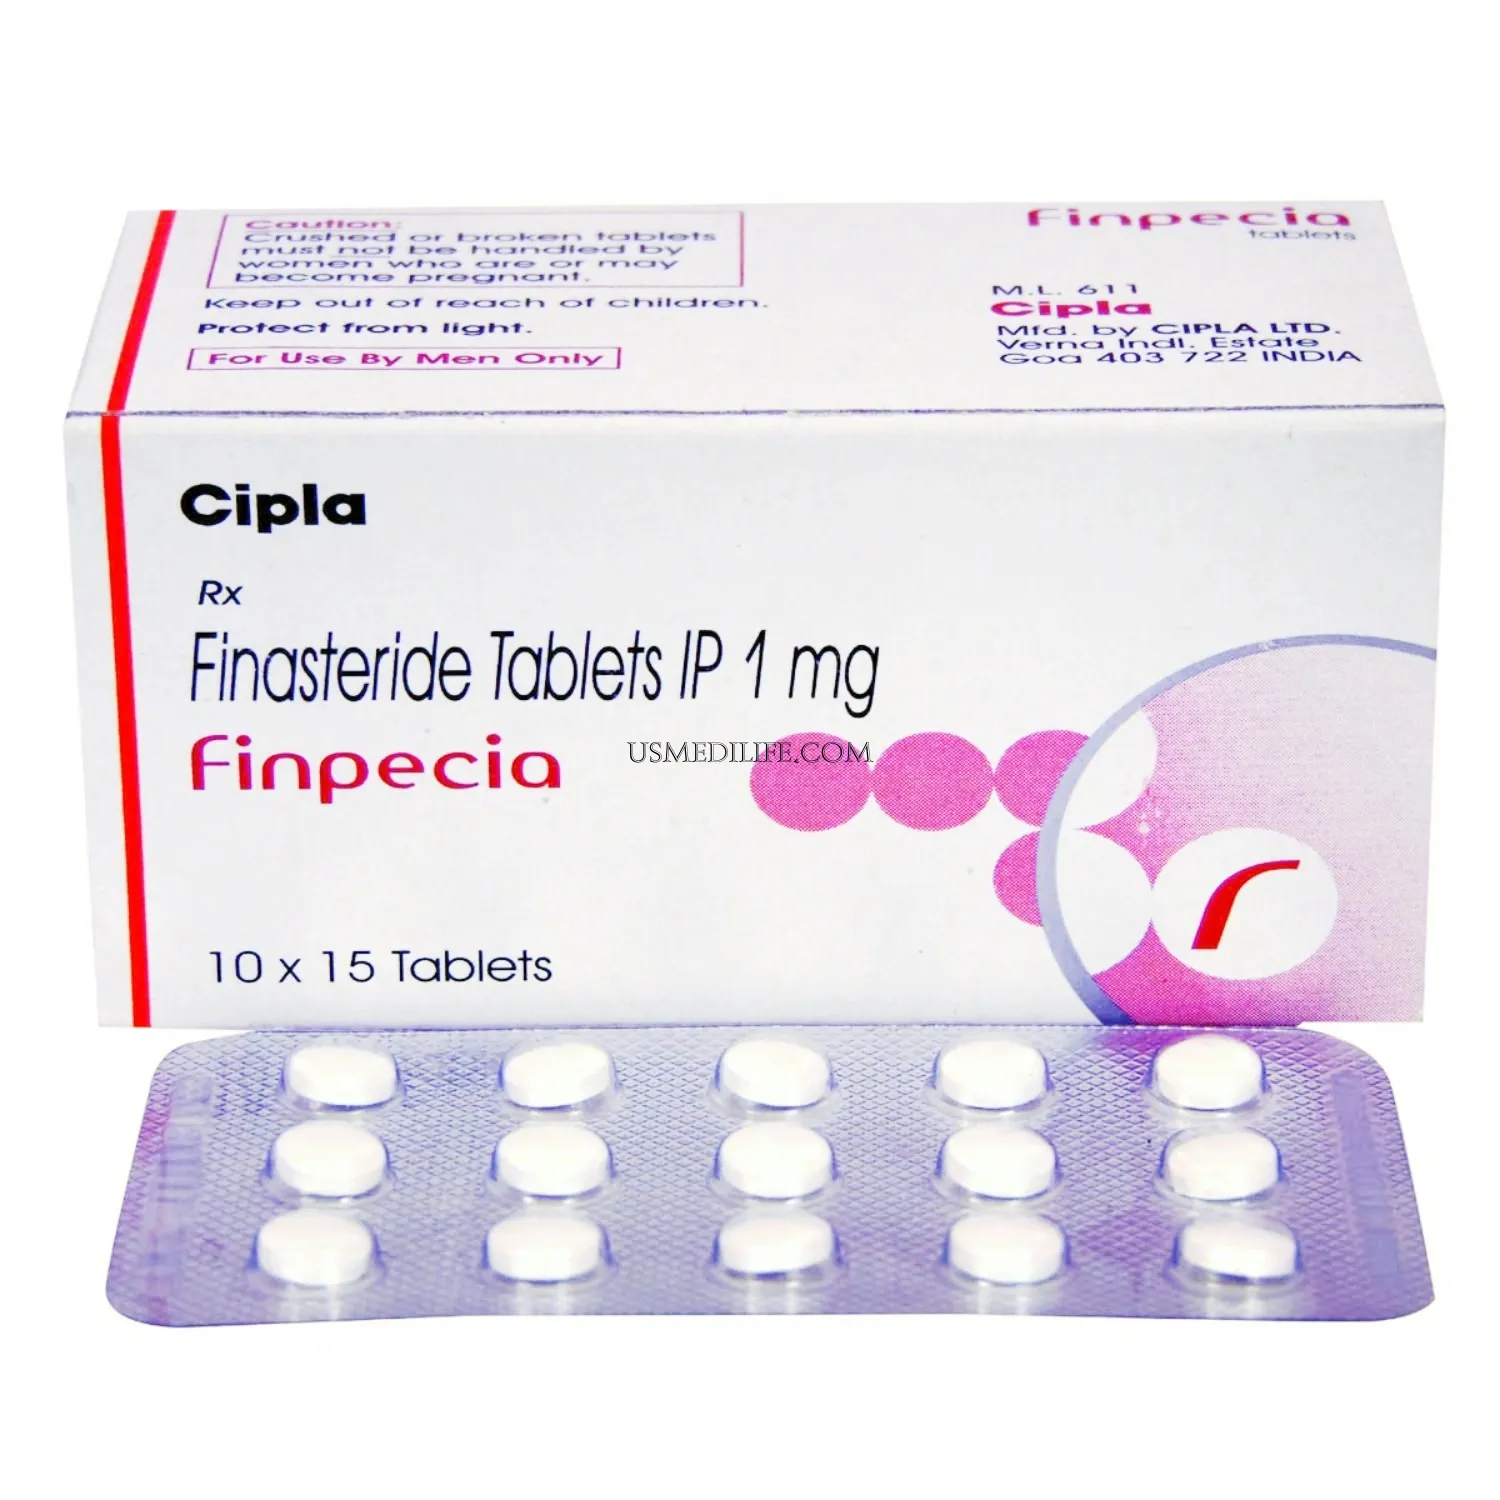 finpecia-1mg                    